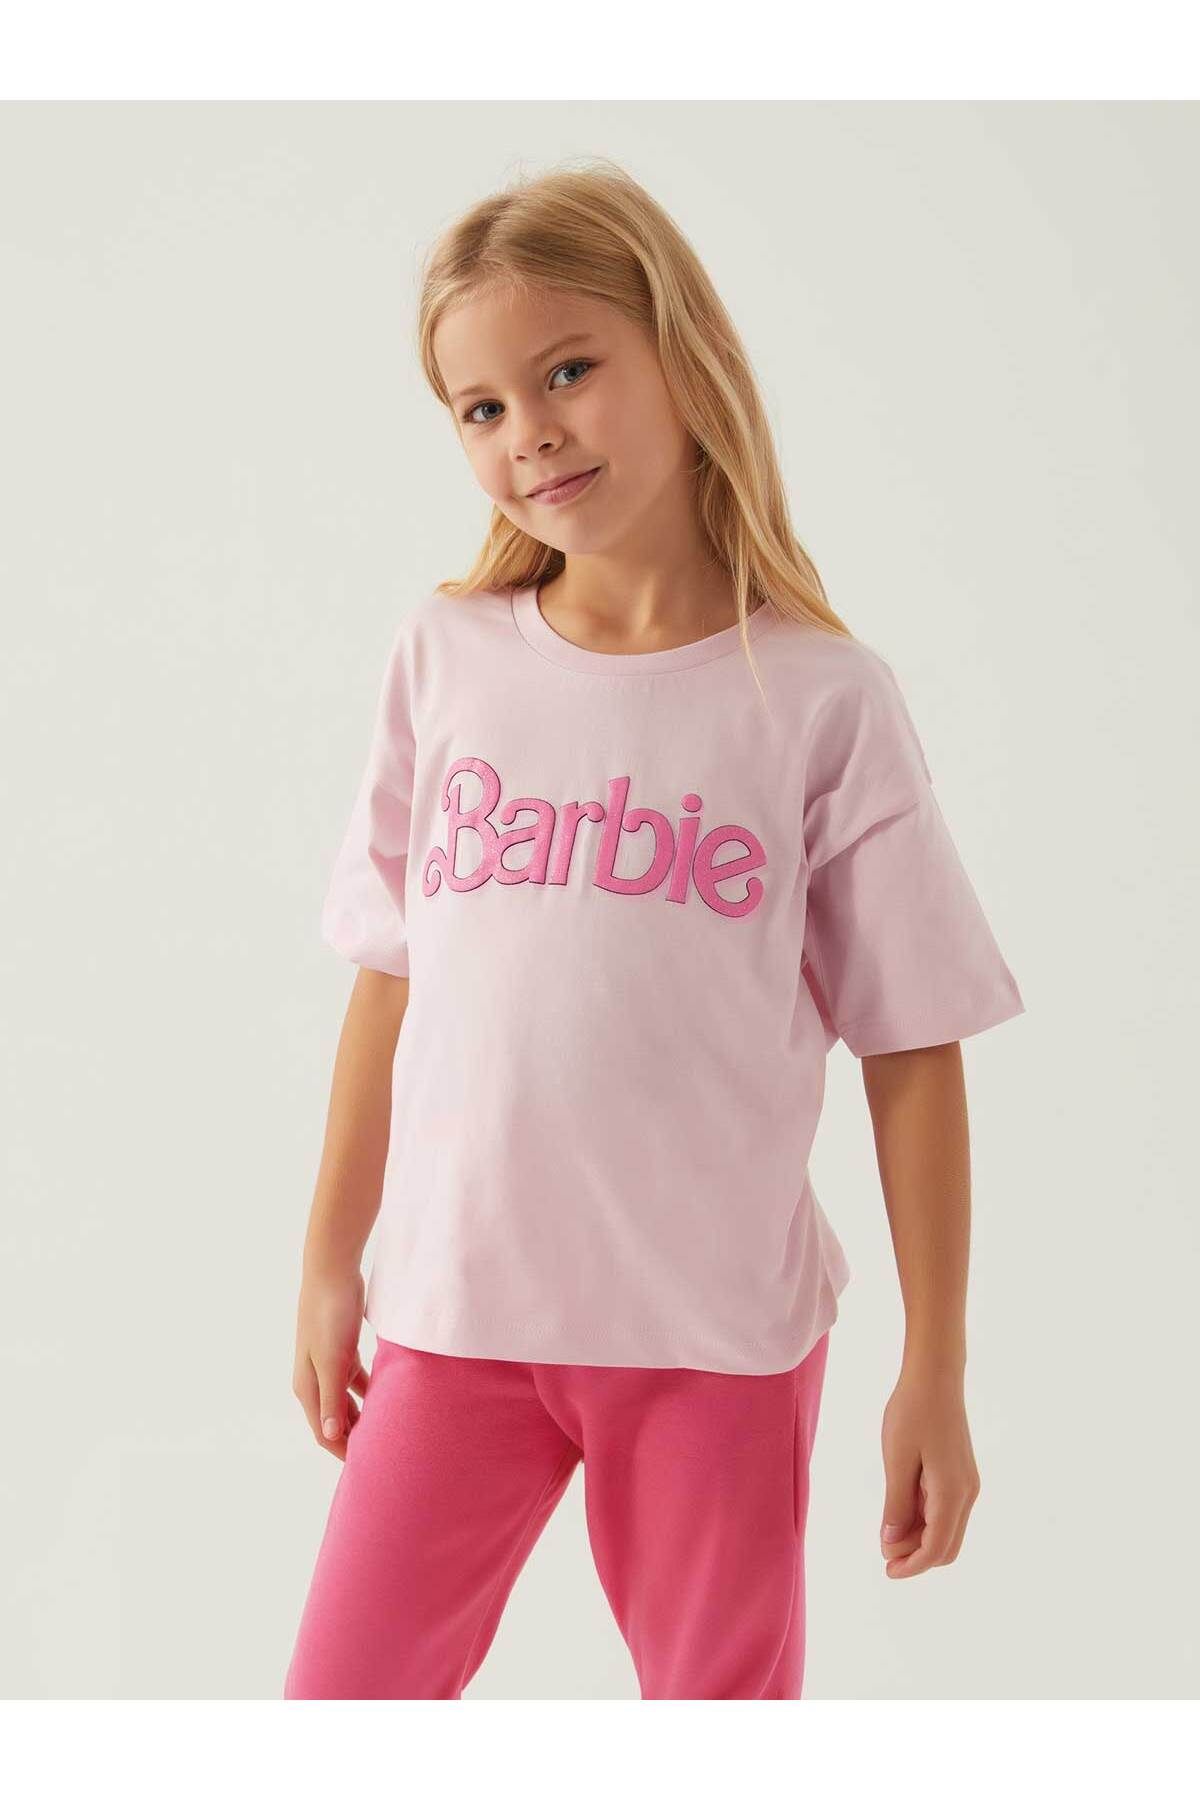 Barbie Kız Çocuk Tişört 3-7 Yaş Toz Pembe 18214772324S1